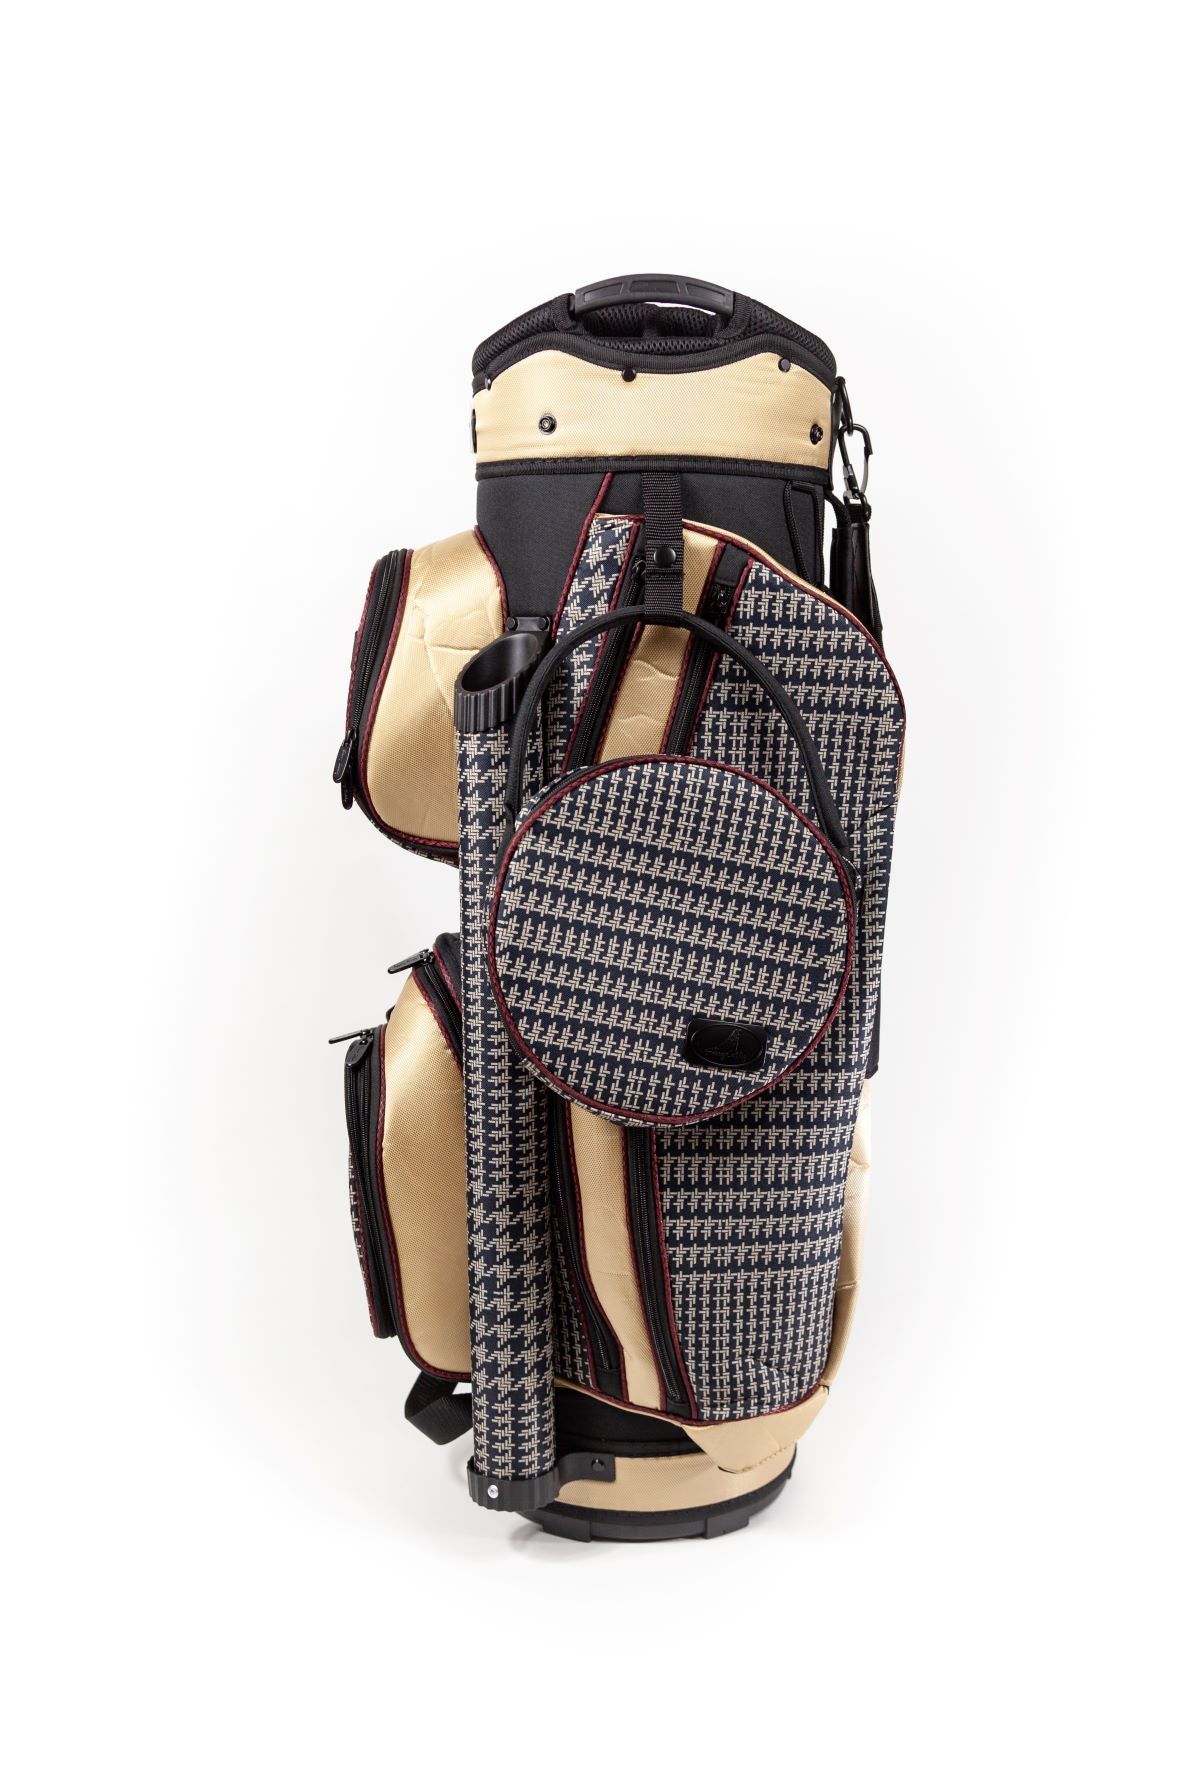 Sassy Caddy Adelaide Ladies Golf Bag